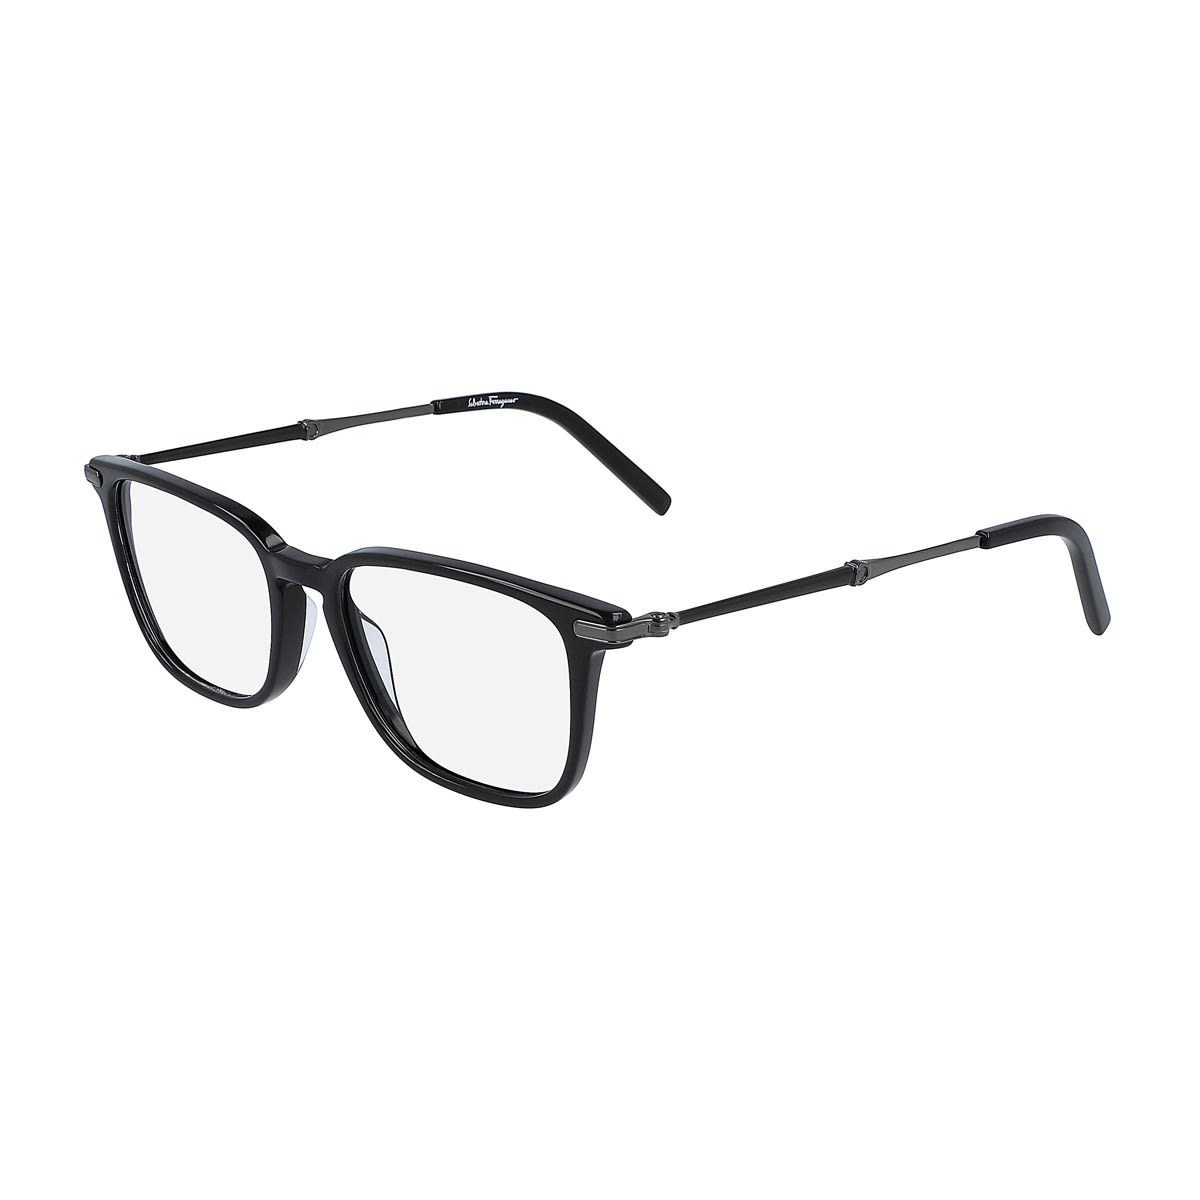 Sf2861 Glasses